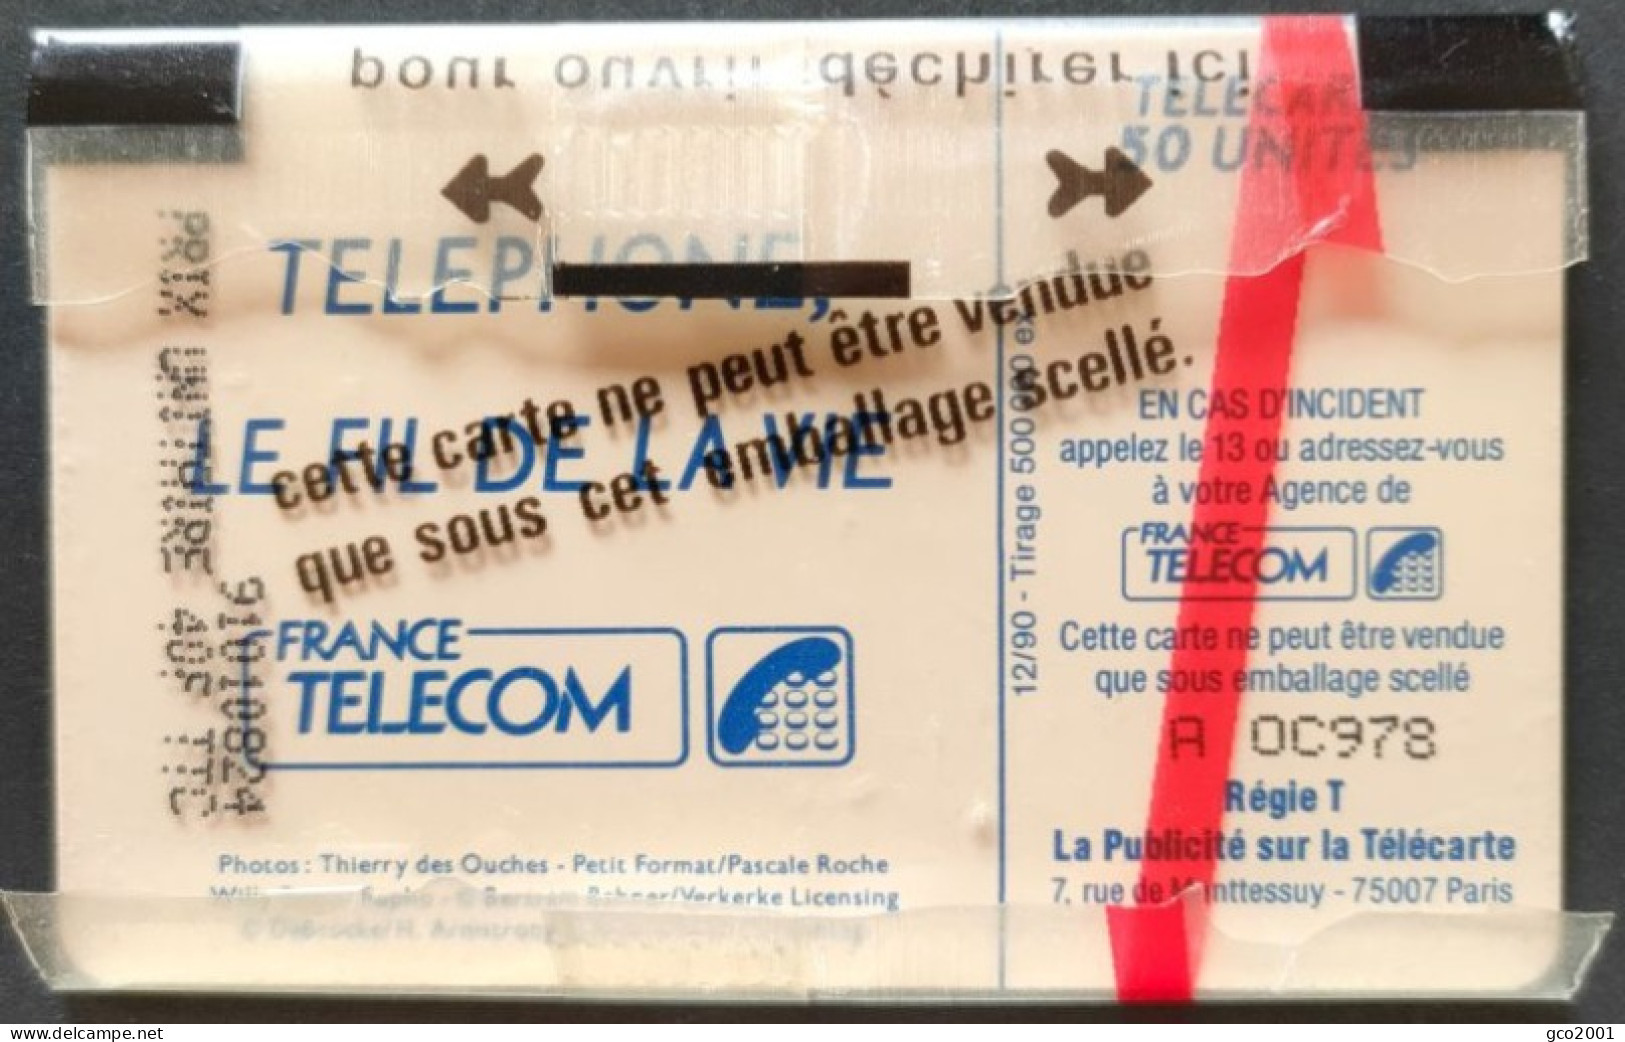 TELECARTE PUBLIQUE FRANCE F130 - PHOTO - 50 U - NSB - 1990